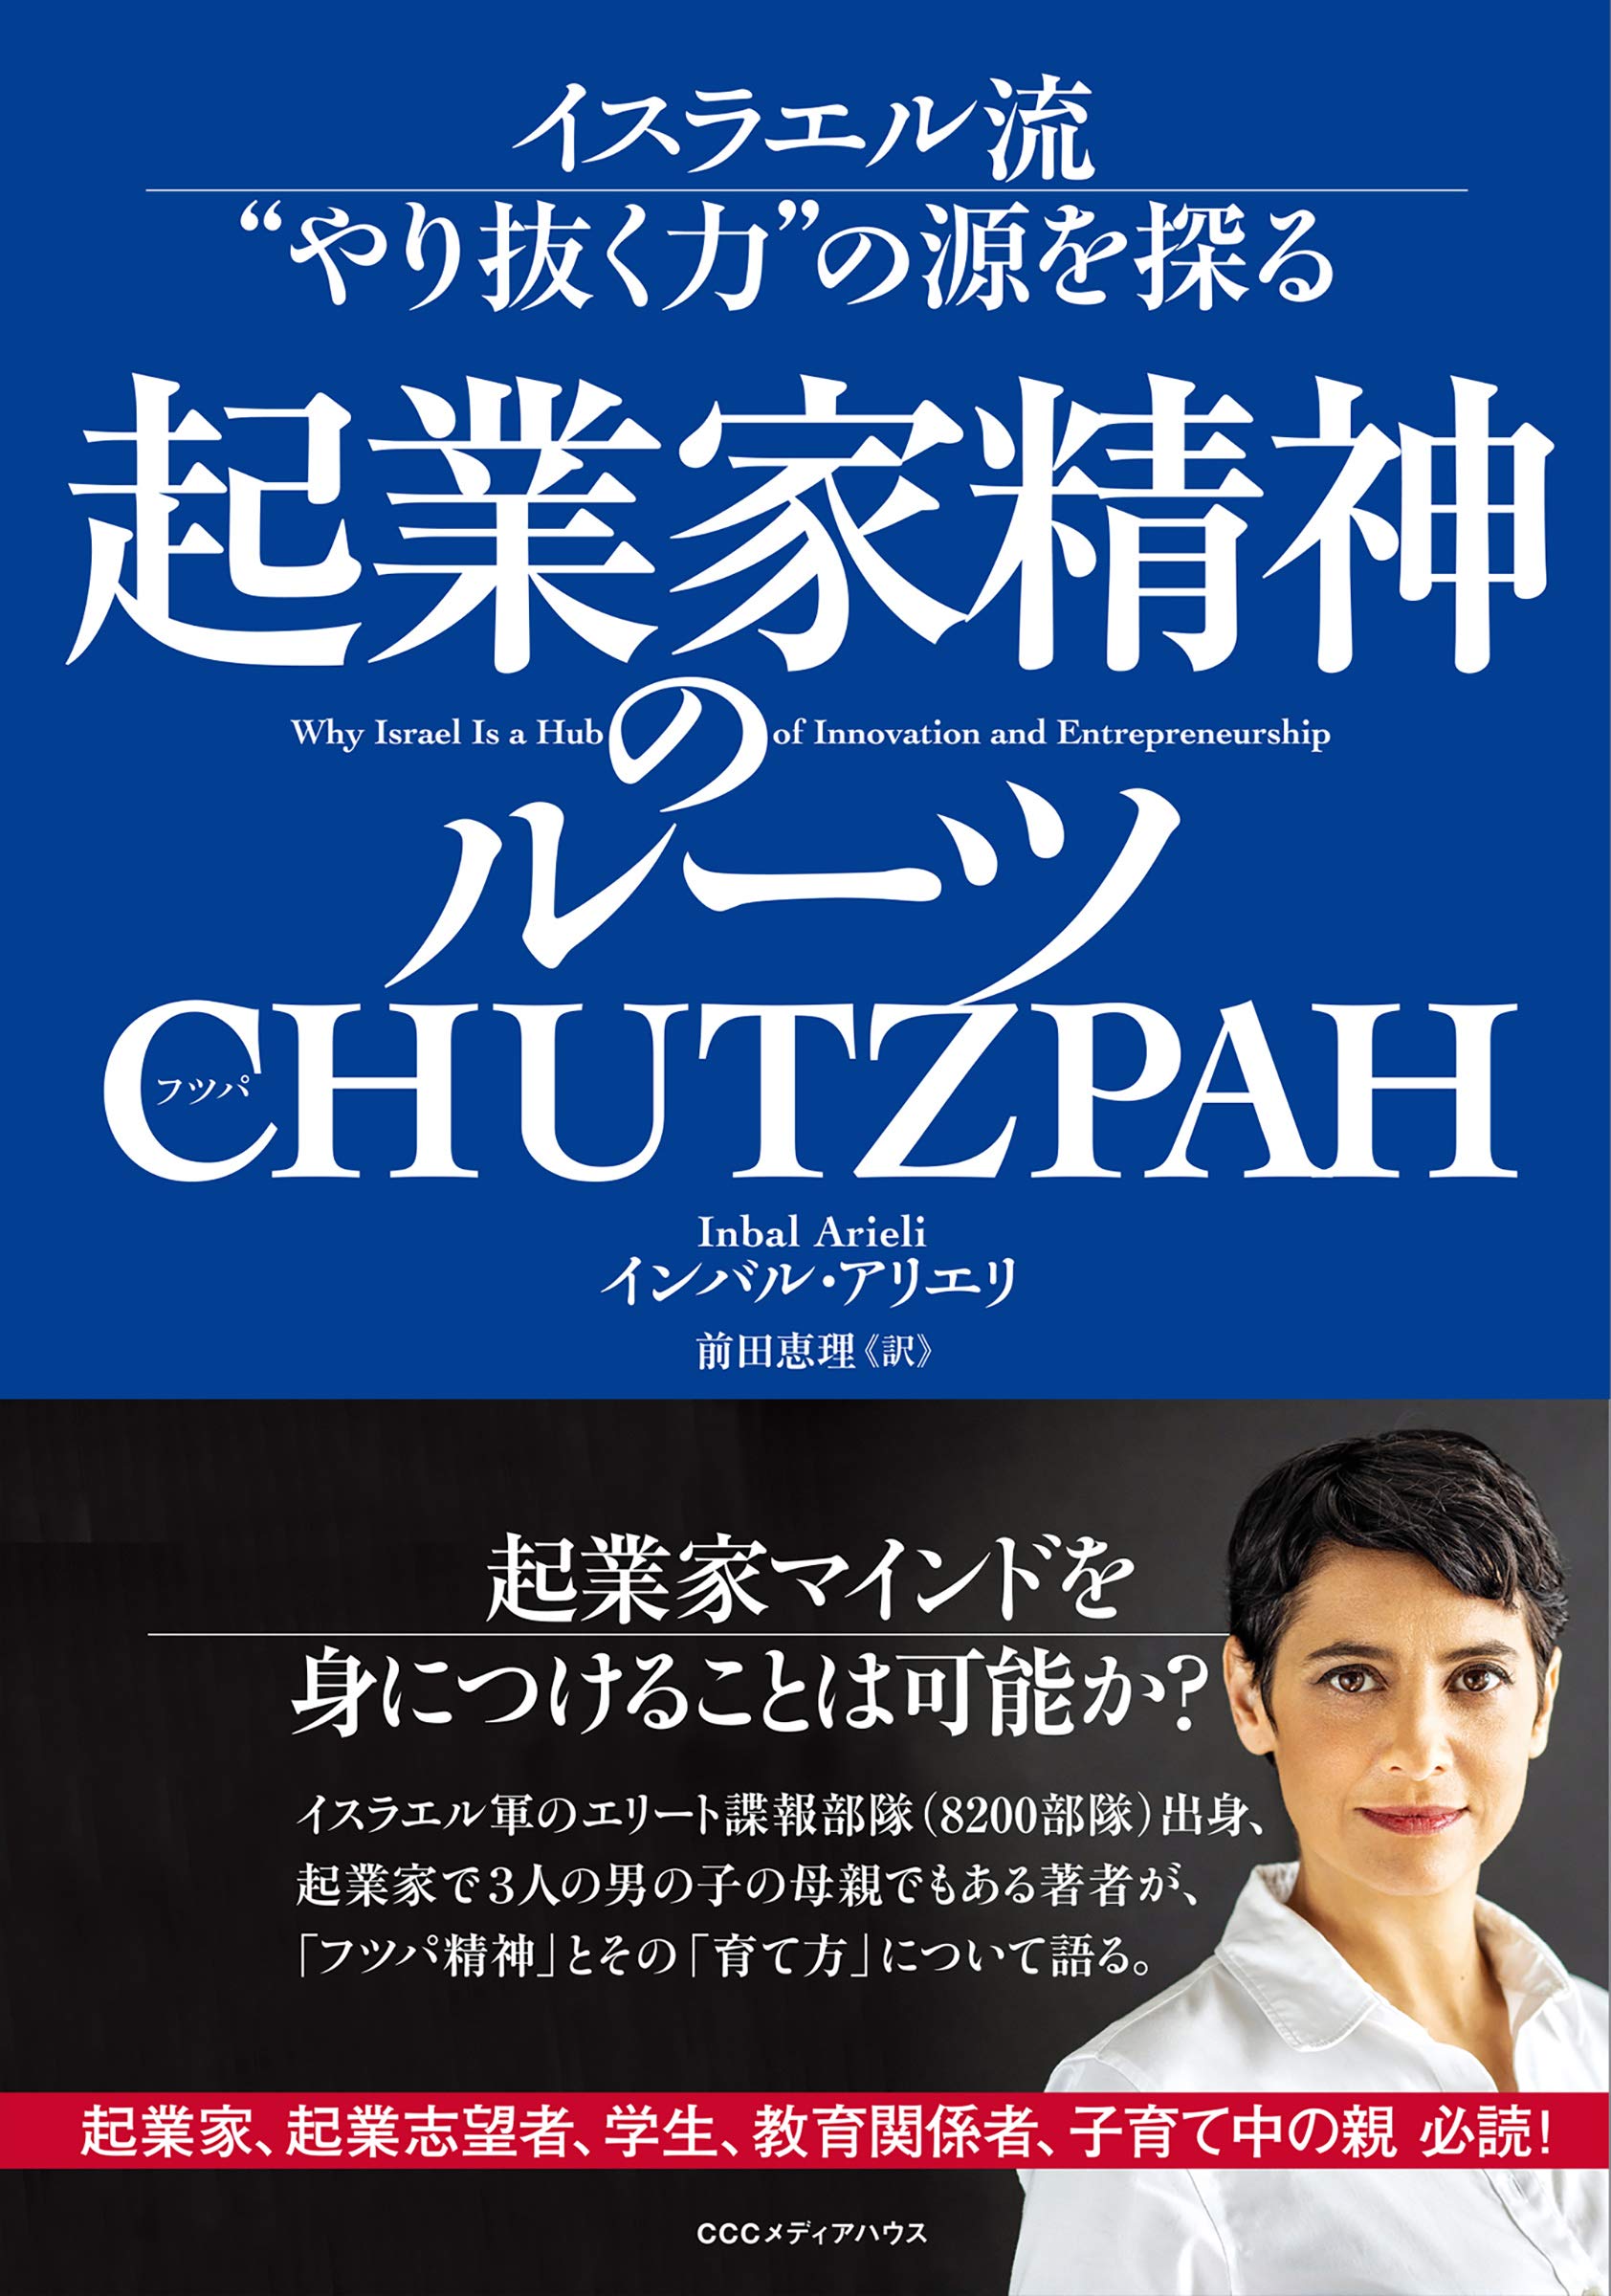 Chutzpah -  Israel